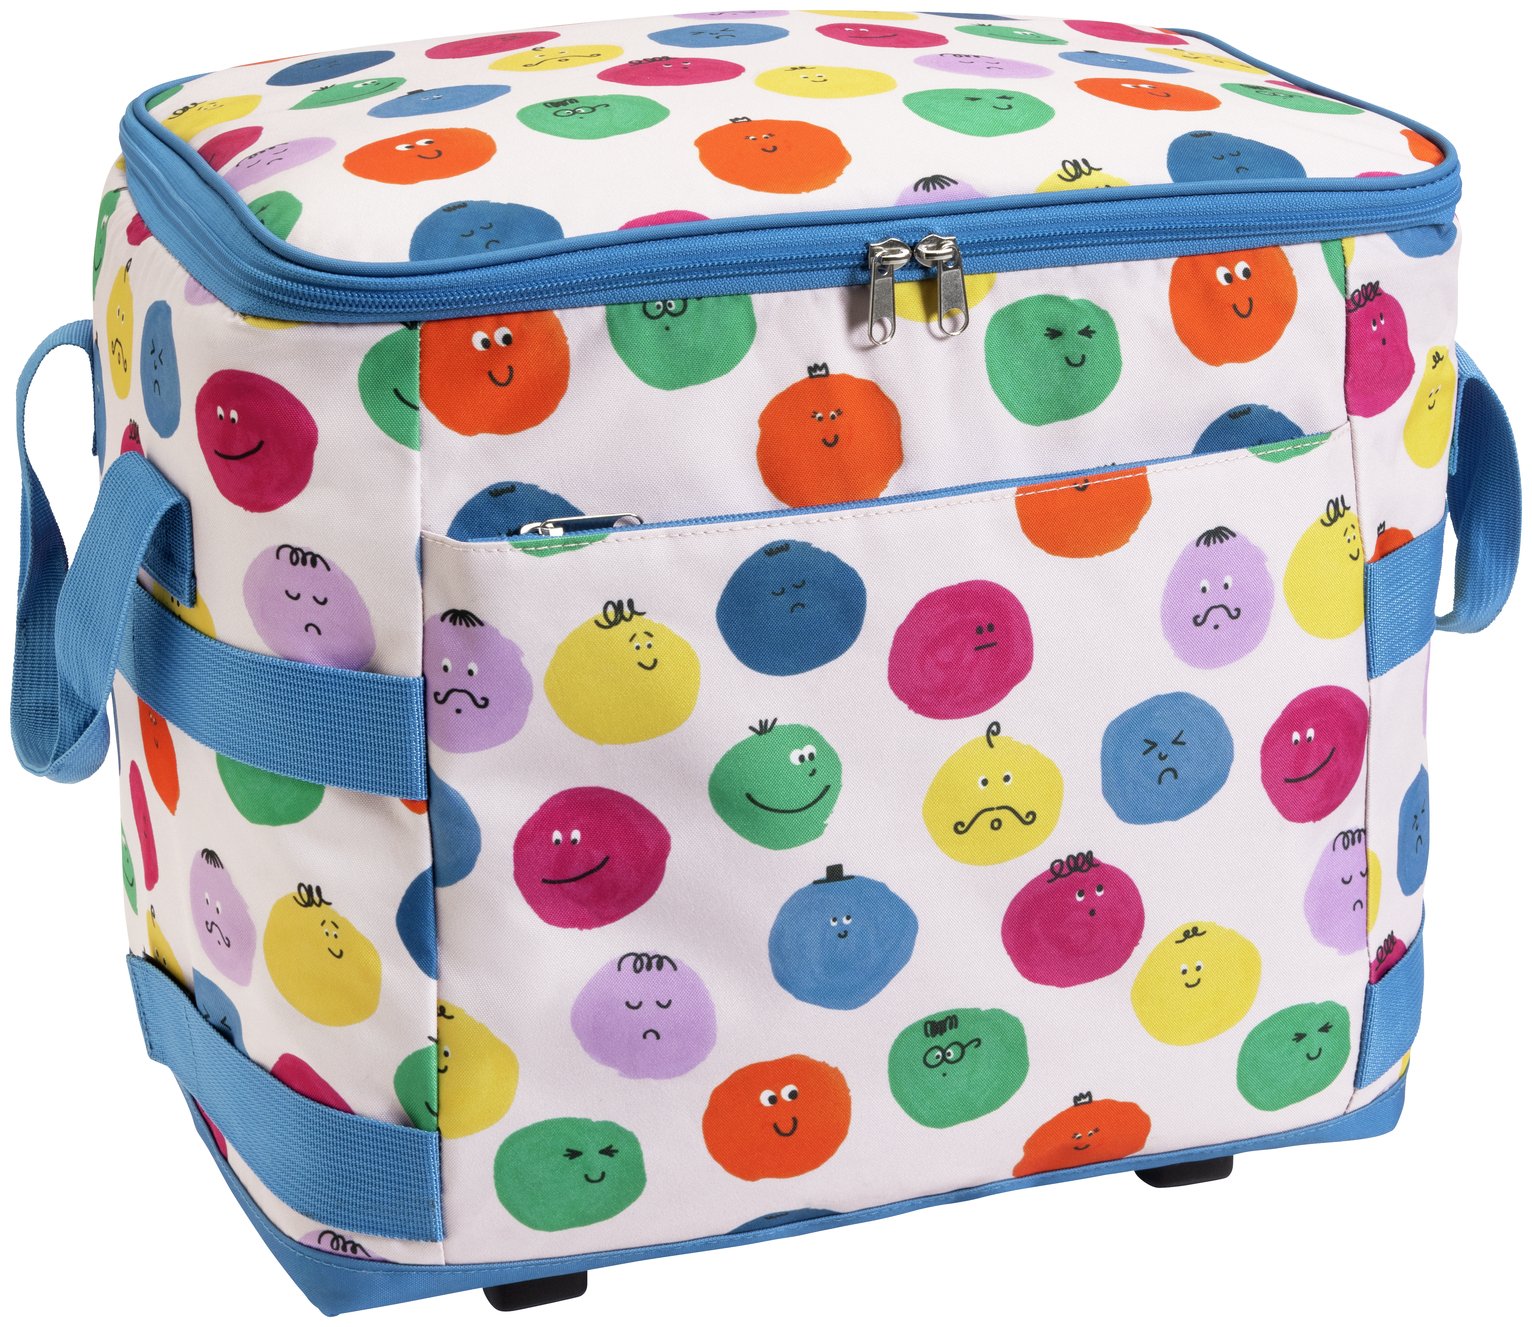 Home Cool Bag On wheel - Multicoloured